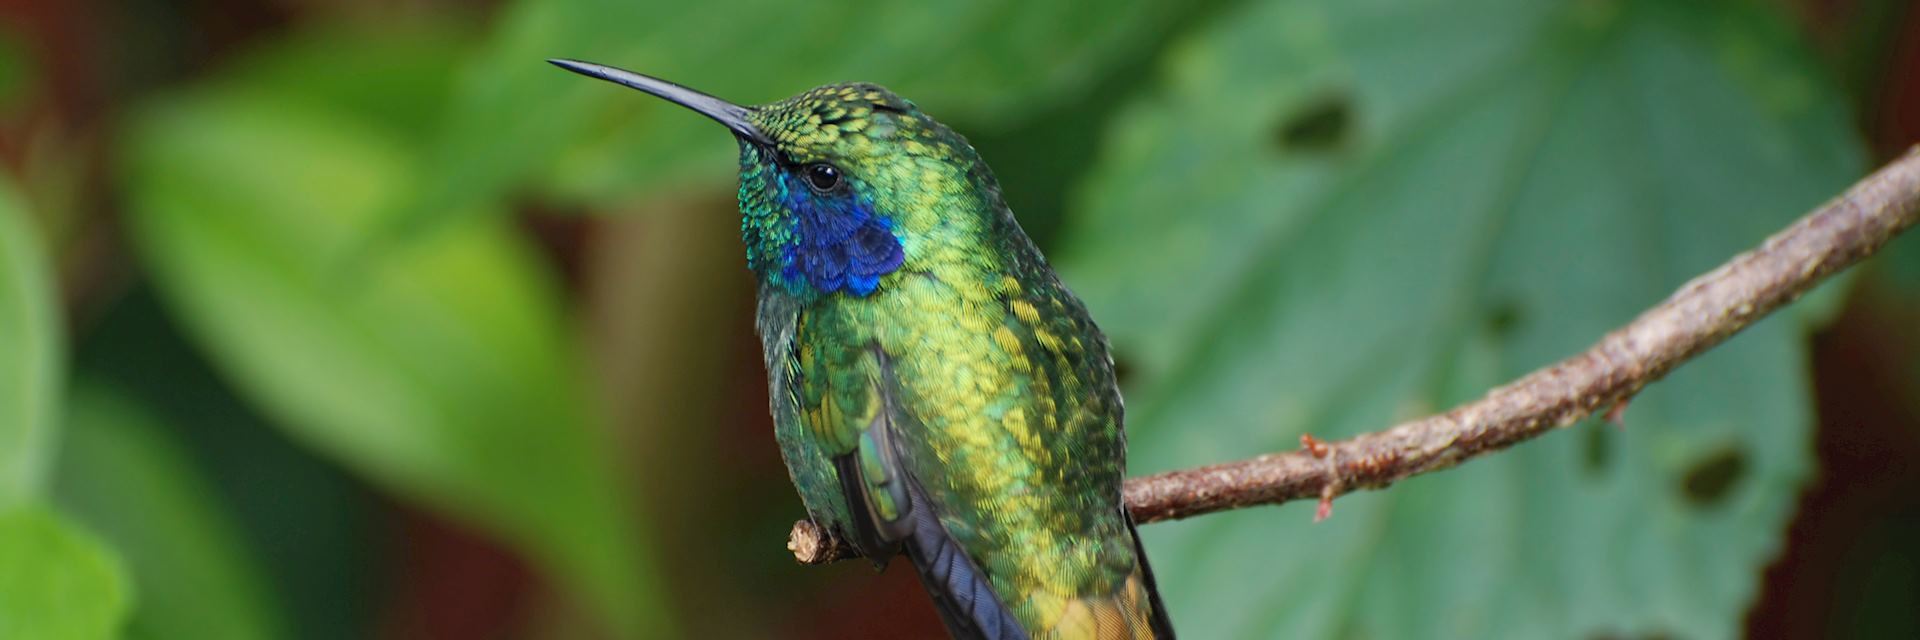 Hummingbird, Monteverde Cloudforest Reserve, Costa Rica